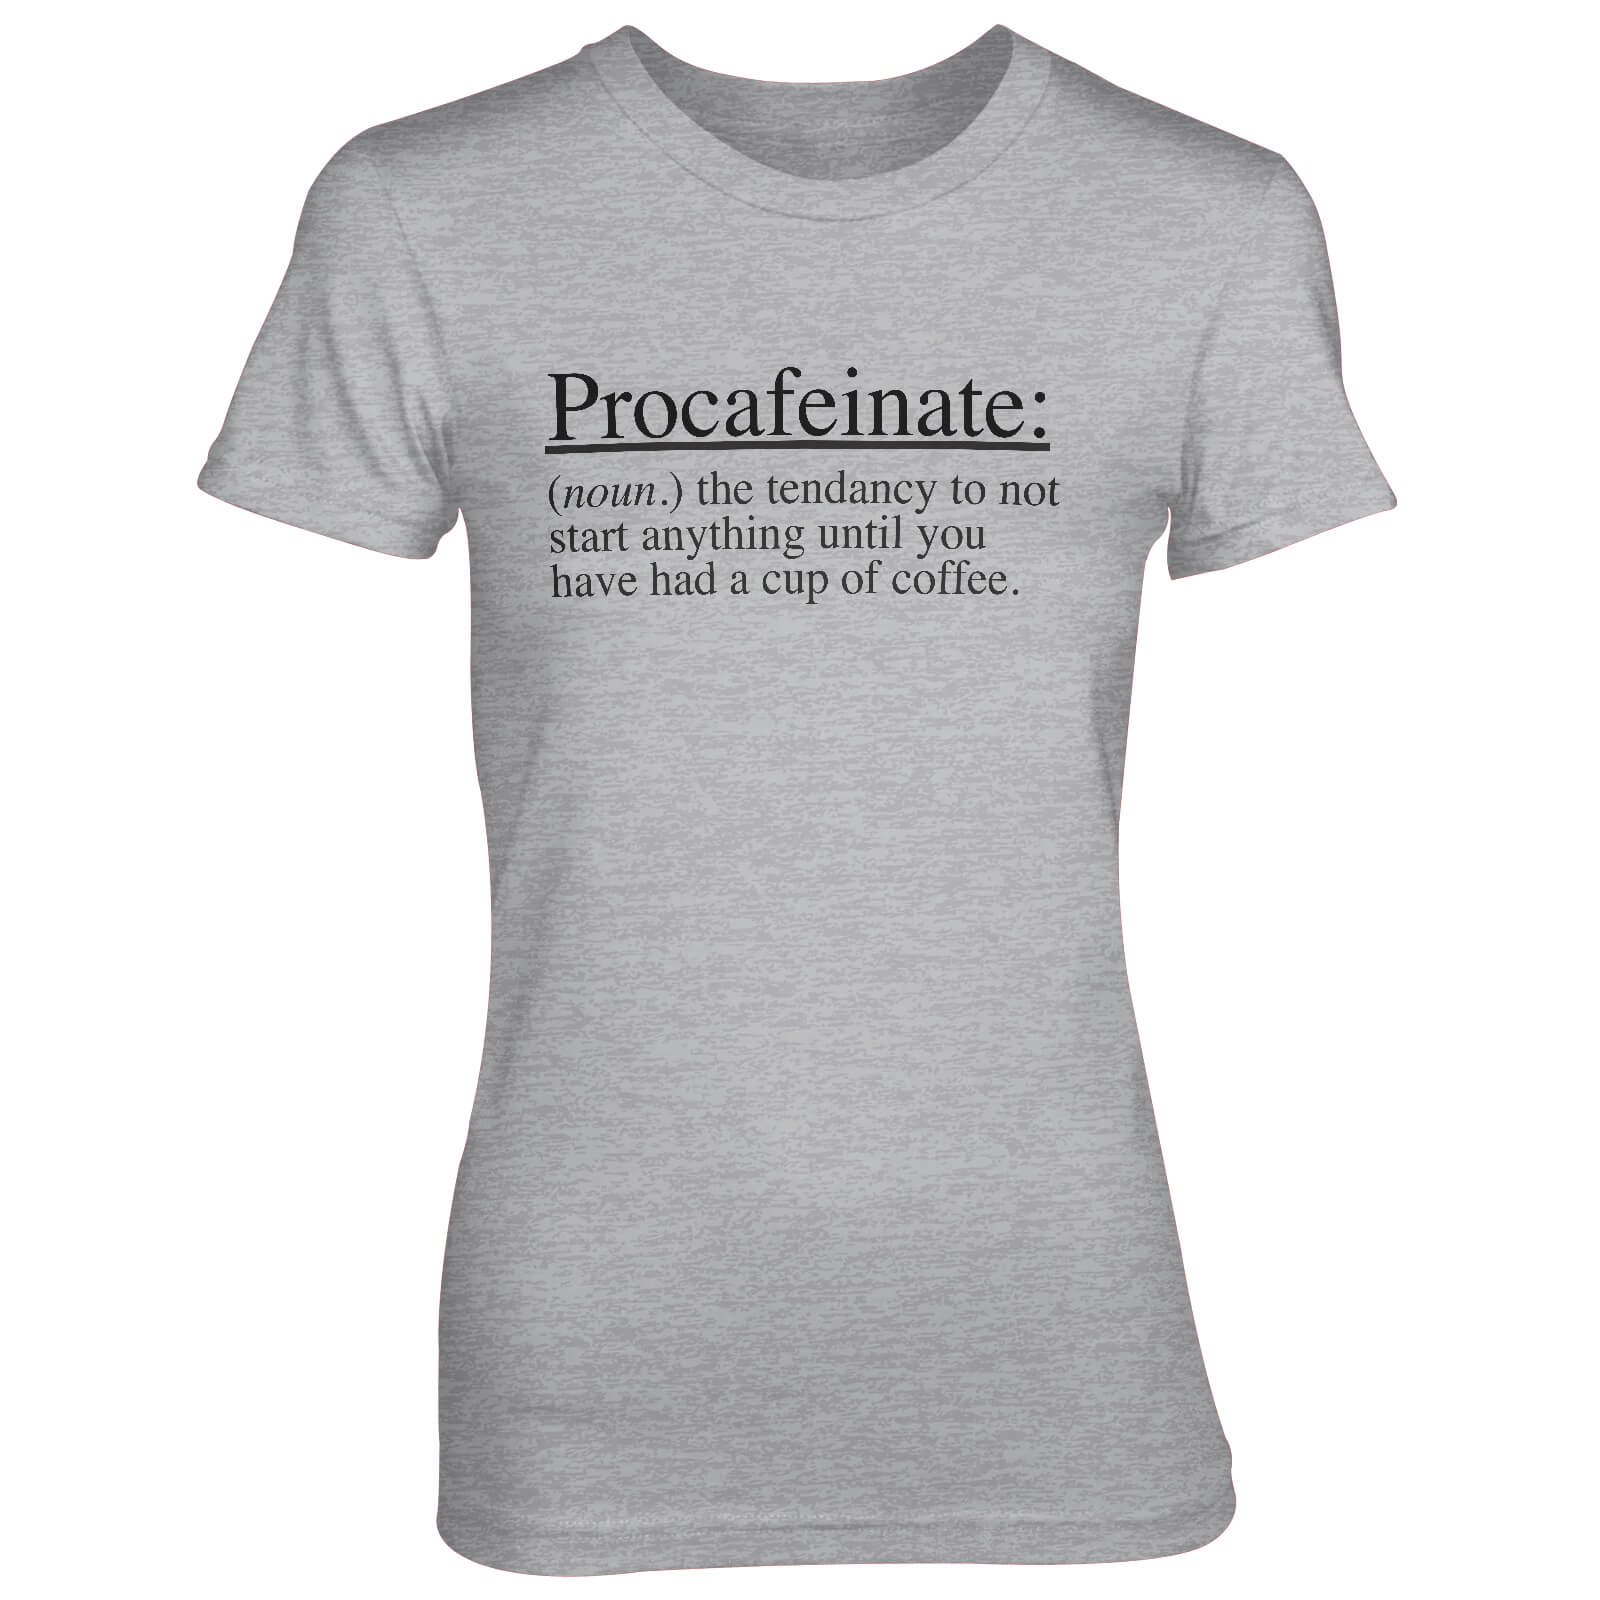 Procafeinate: The Tendancy To Not Start Anything Women's Grey T-Shirt - S - Grey